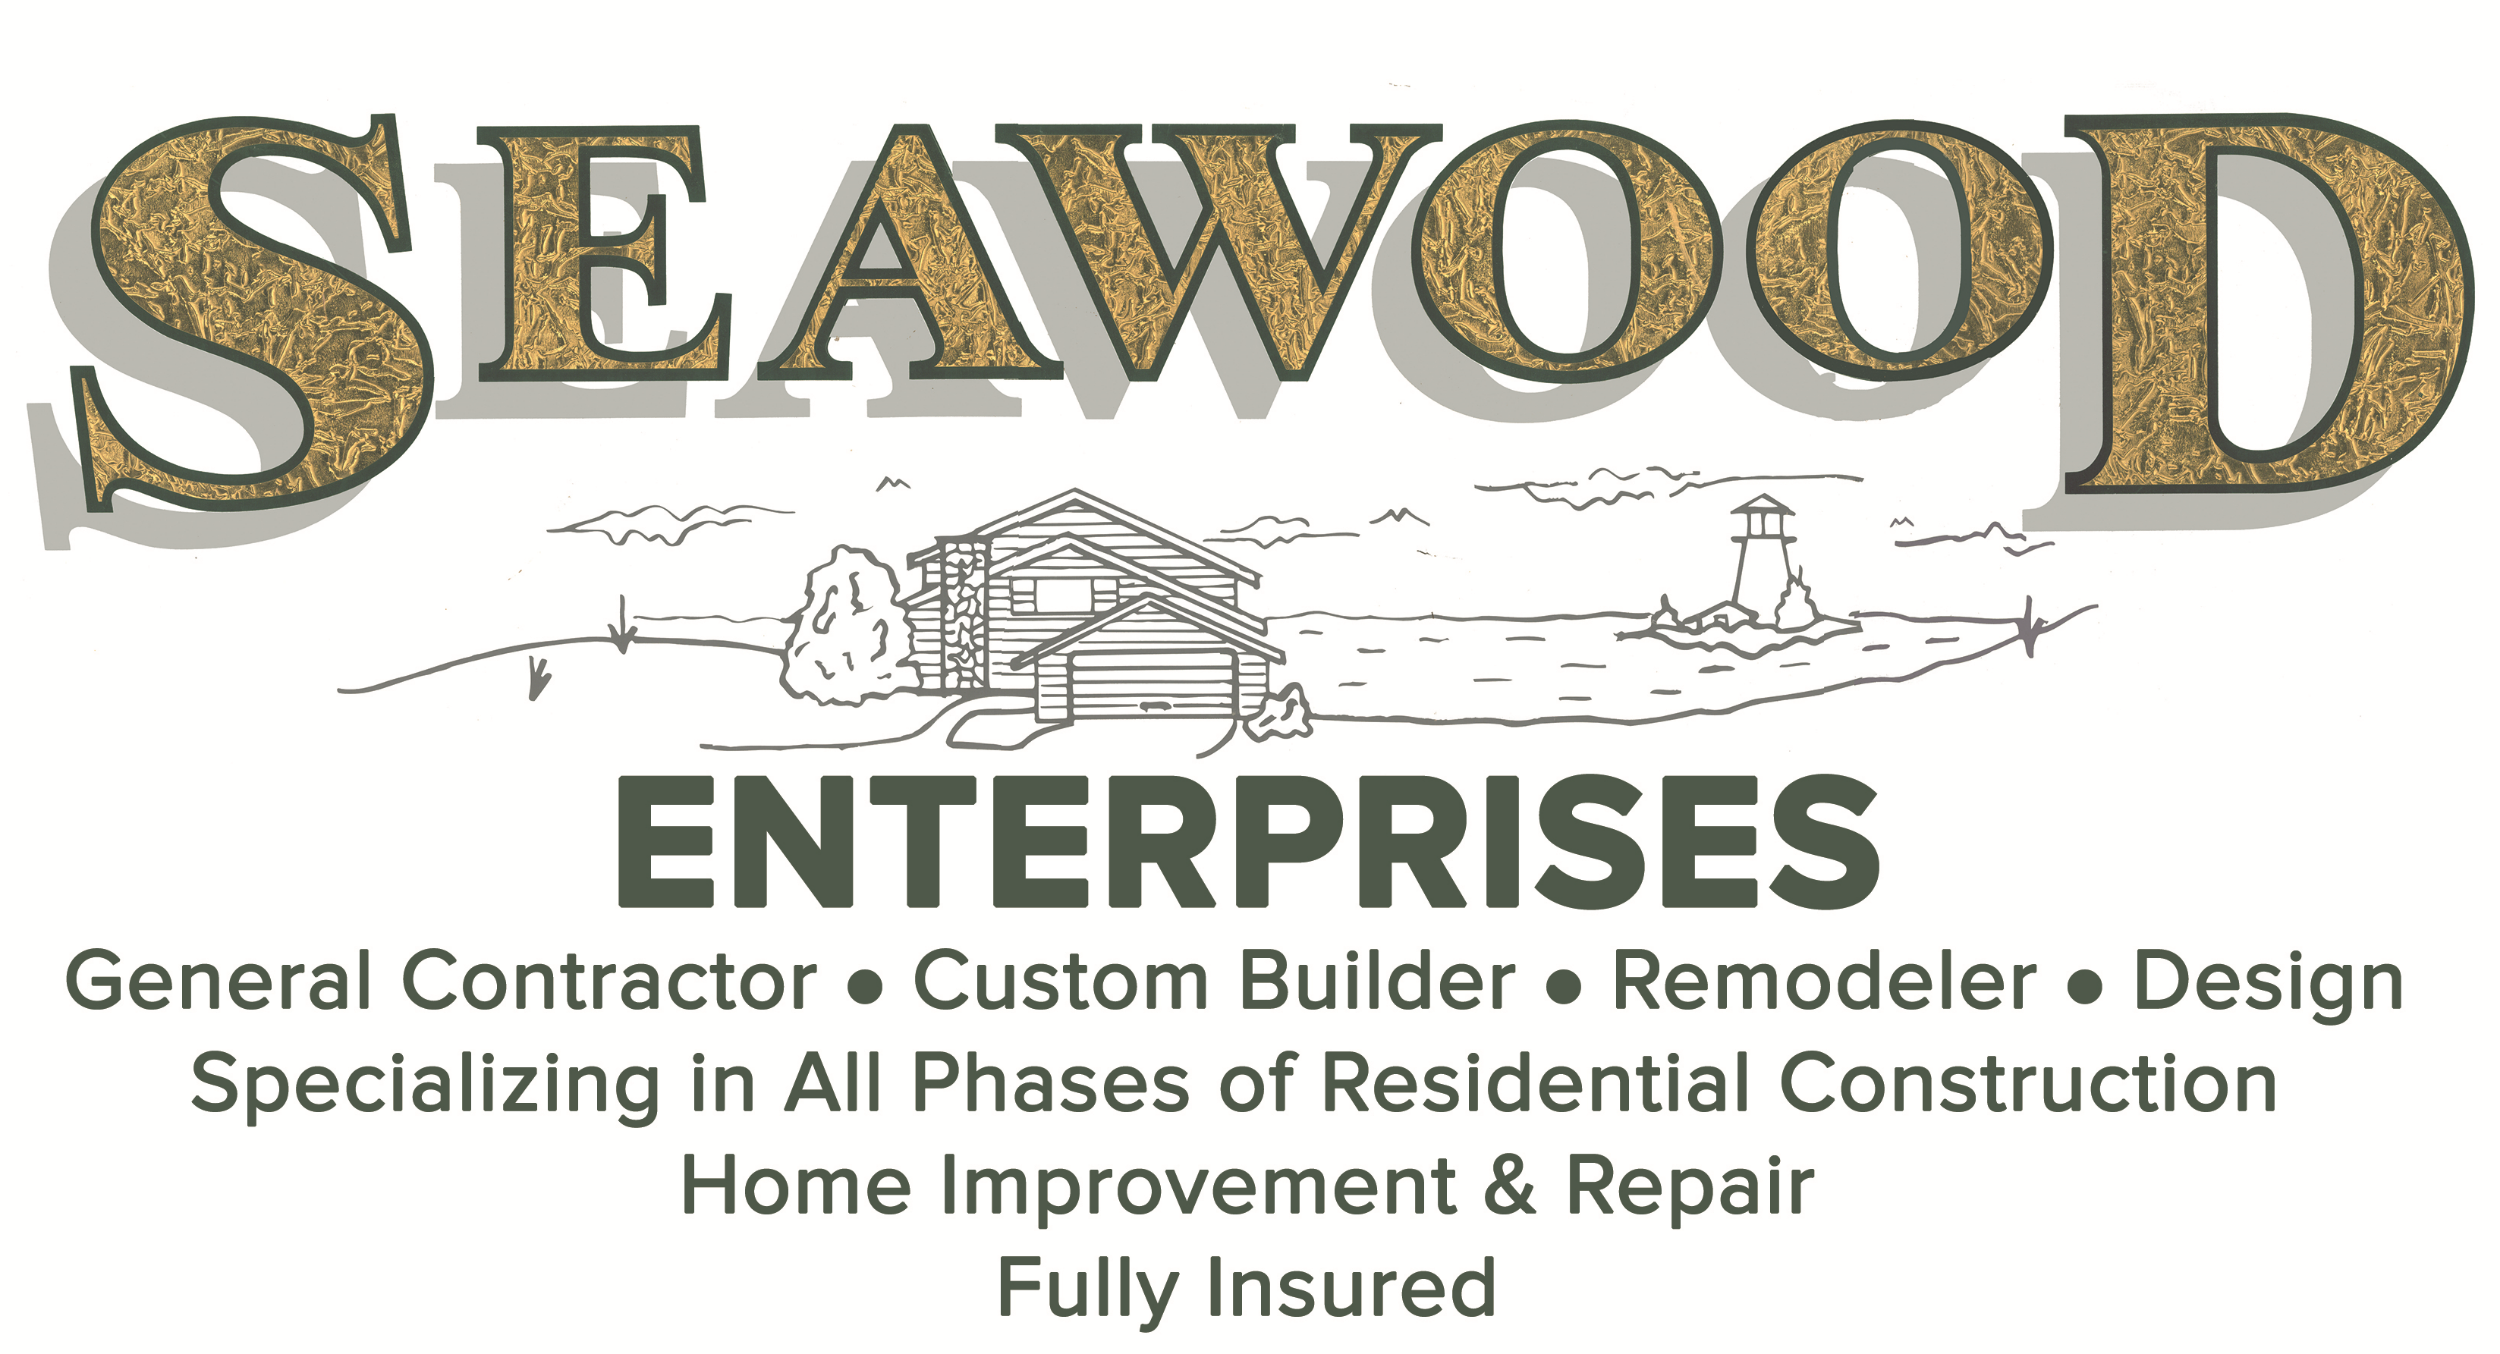 Seawood Enterprises Logo